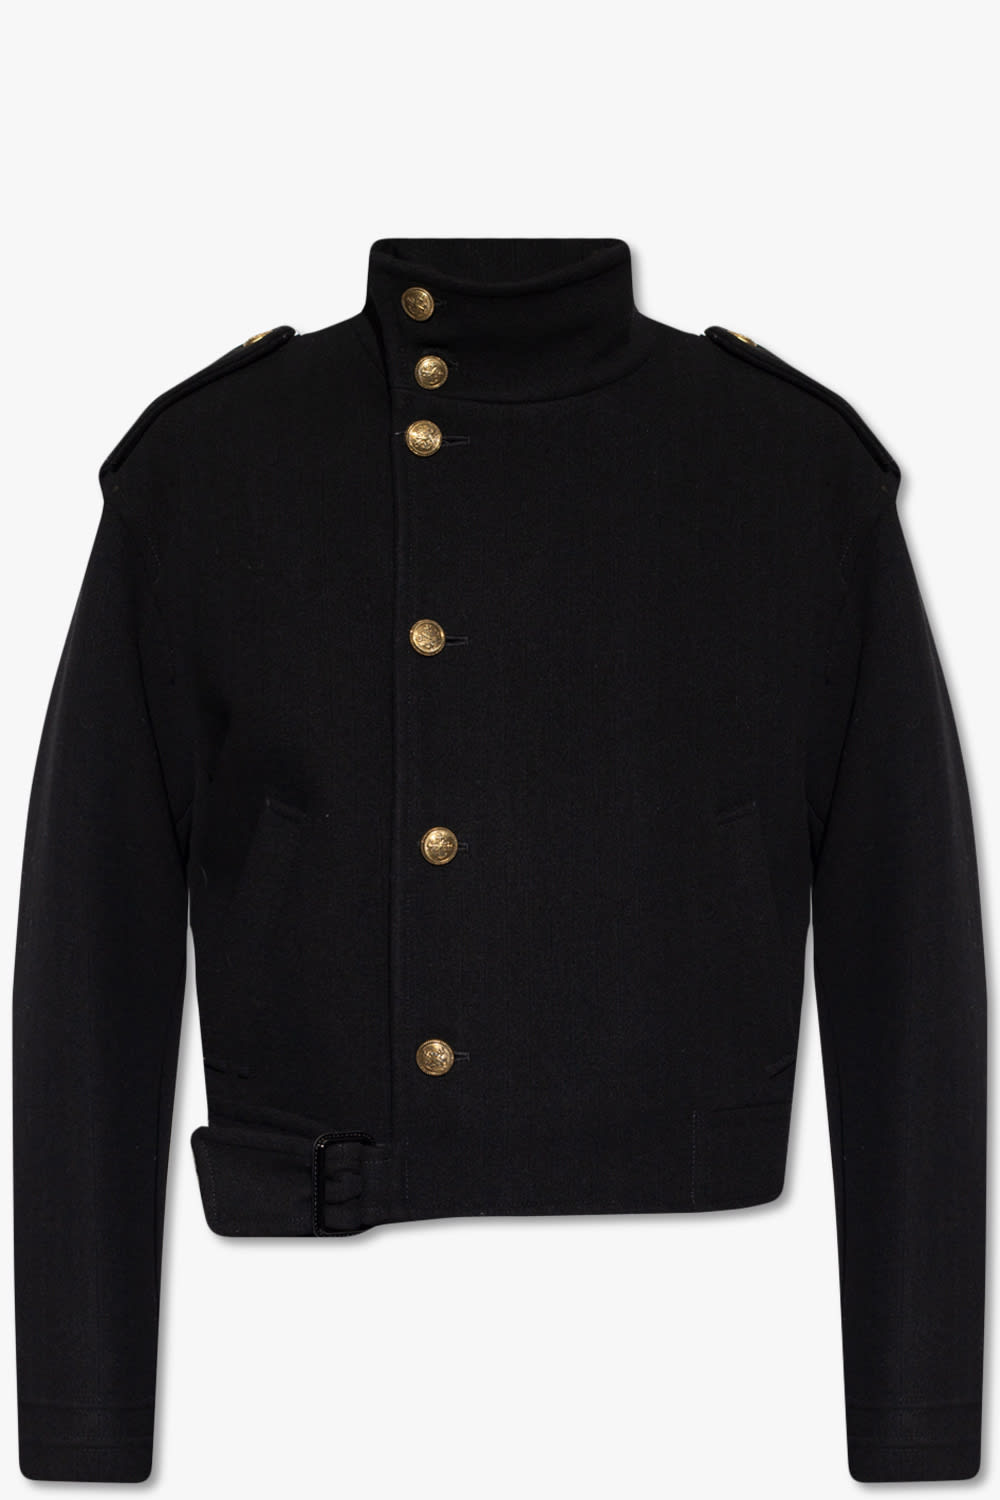 Saint Laurent Military Jacket